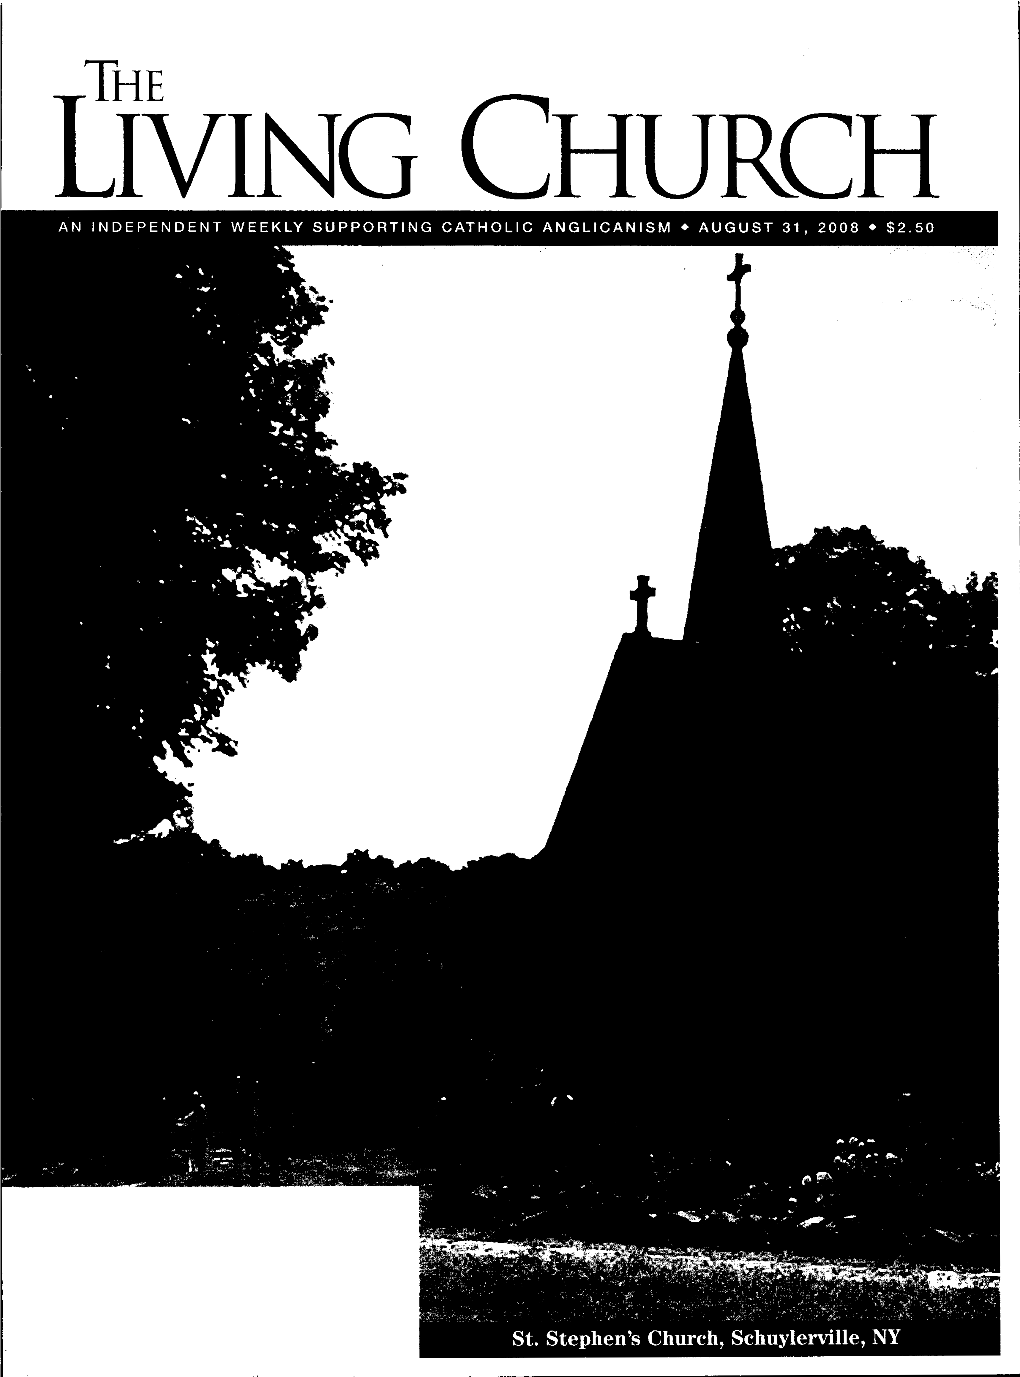 The Living Church Foundation, Inc